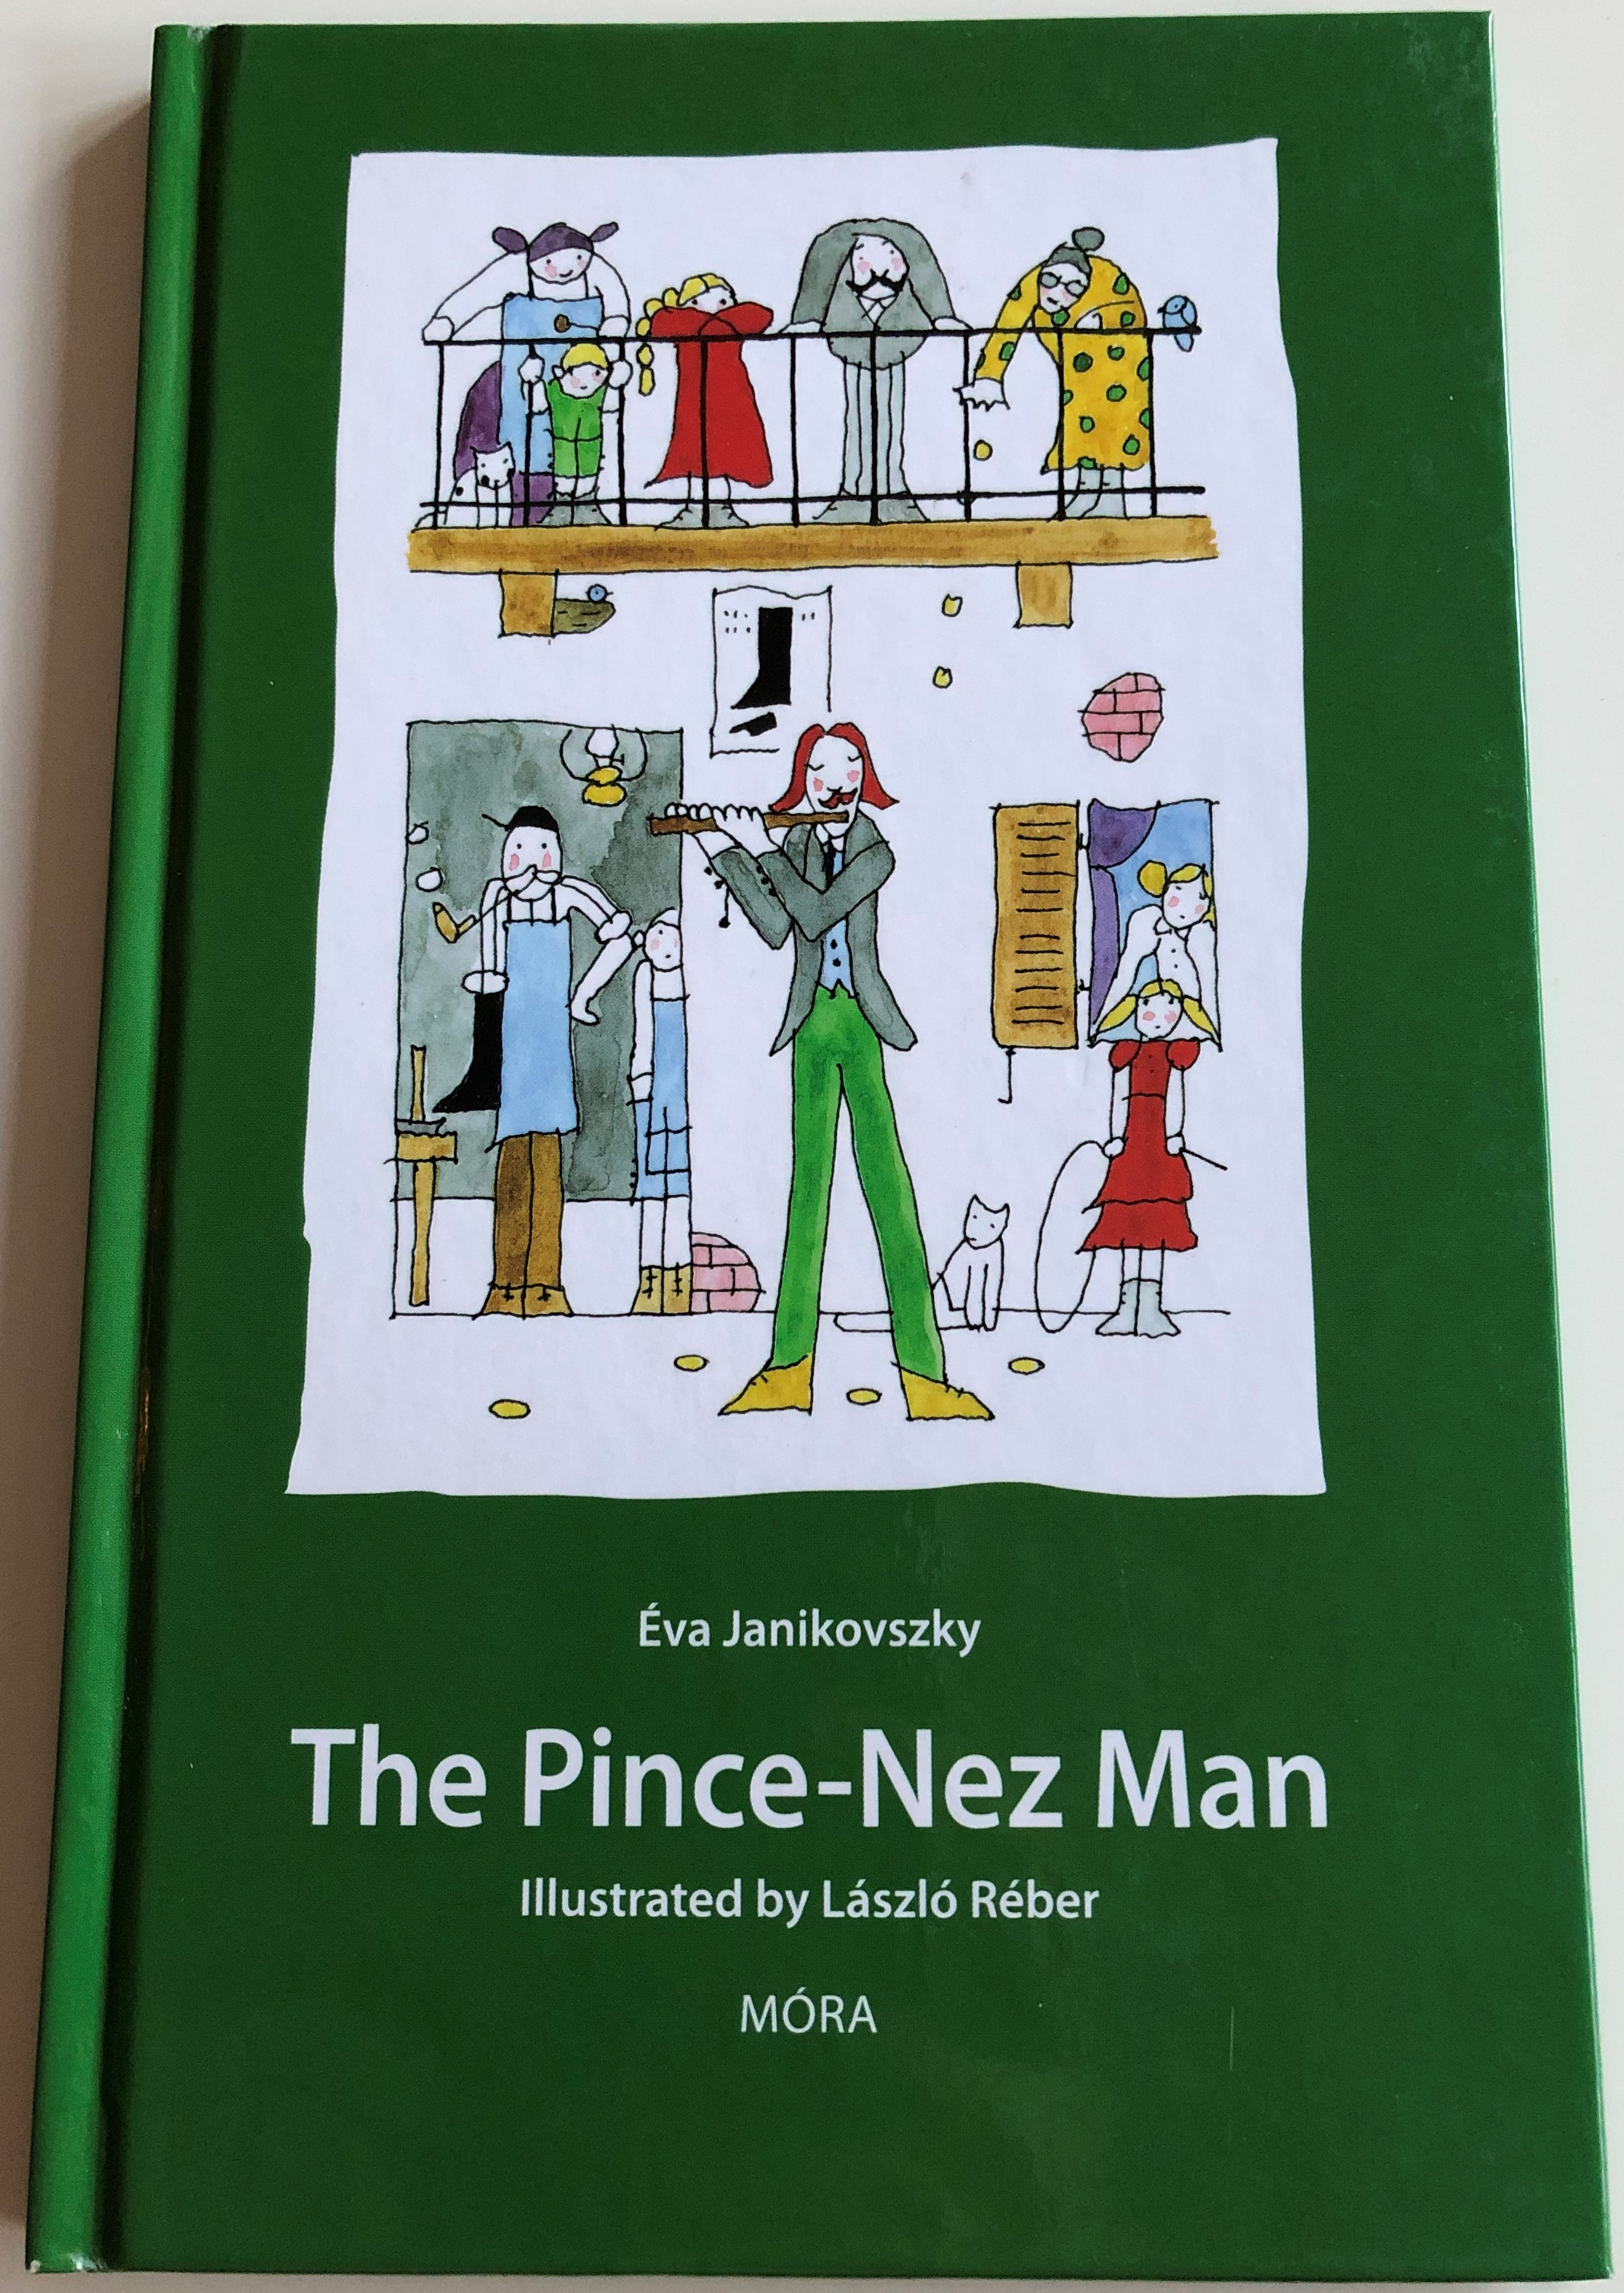 The Pince-Nez Man by Éva Janikovkszy - English edition of Cvikkedli 1.JPG